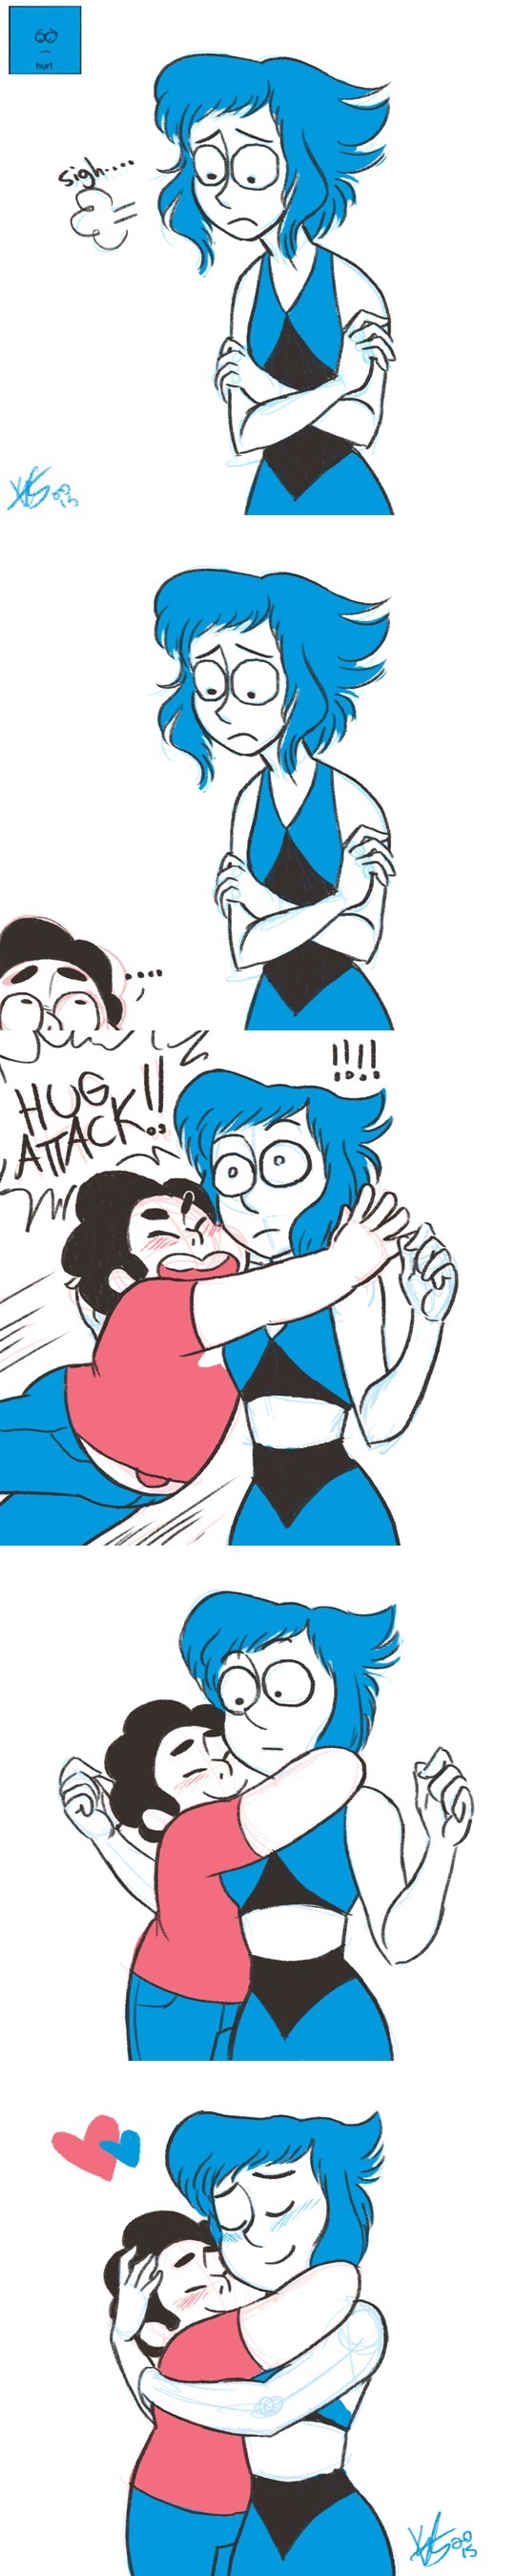 Hug attack - Steven universe, Lapis lazuli, Comics, Longpost